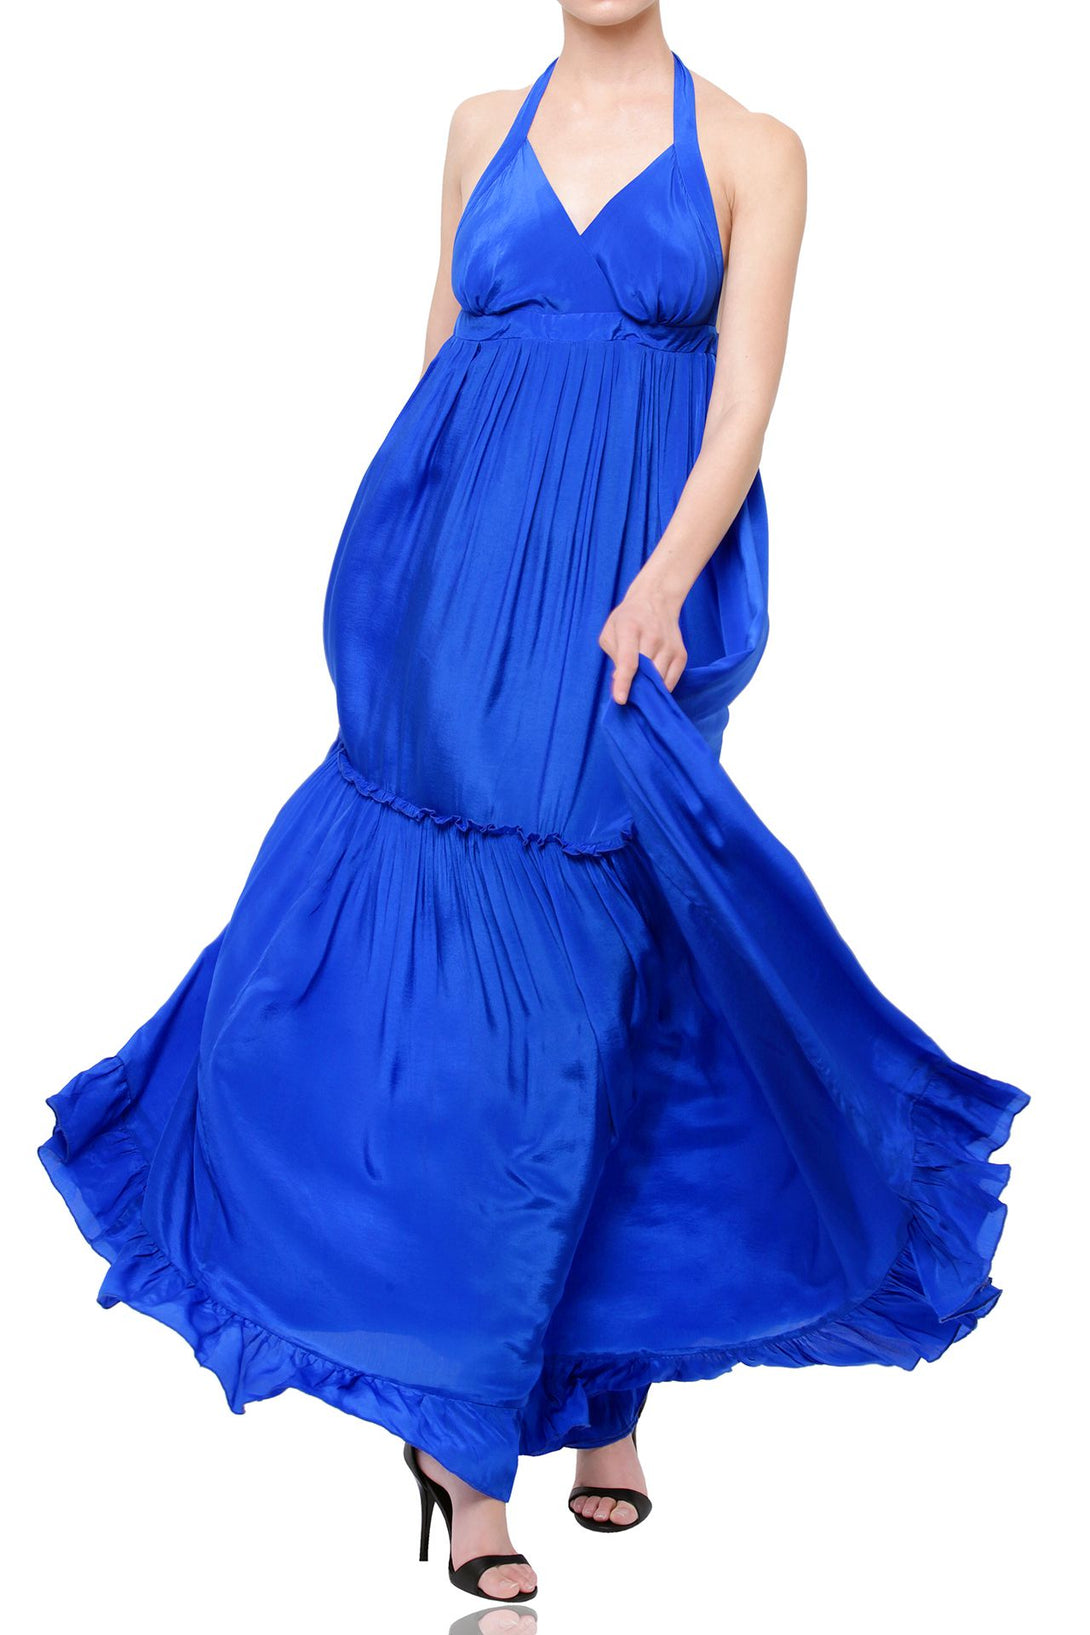  blue formal dresses long, plus size maxi dresses, long summer dresses, the infinity dress,